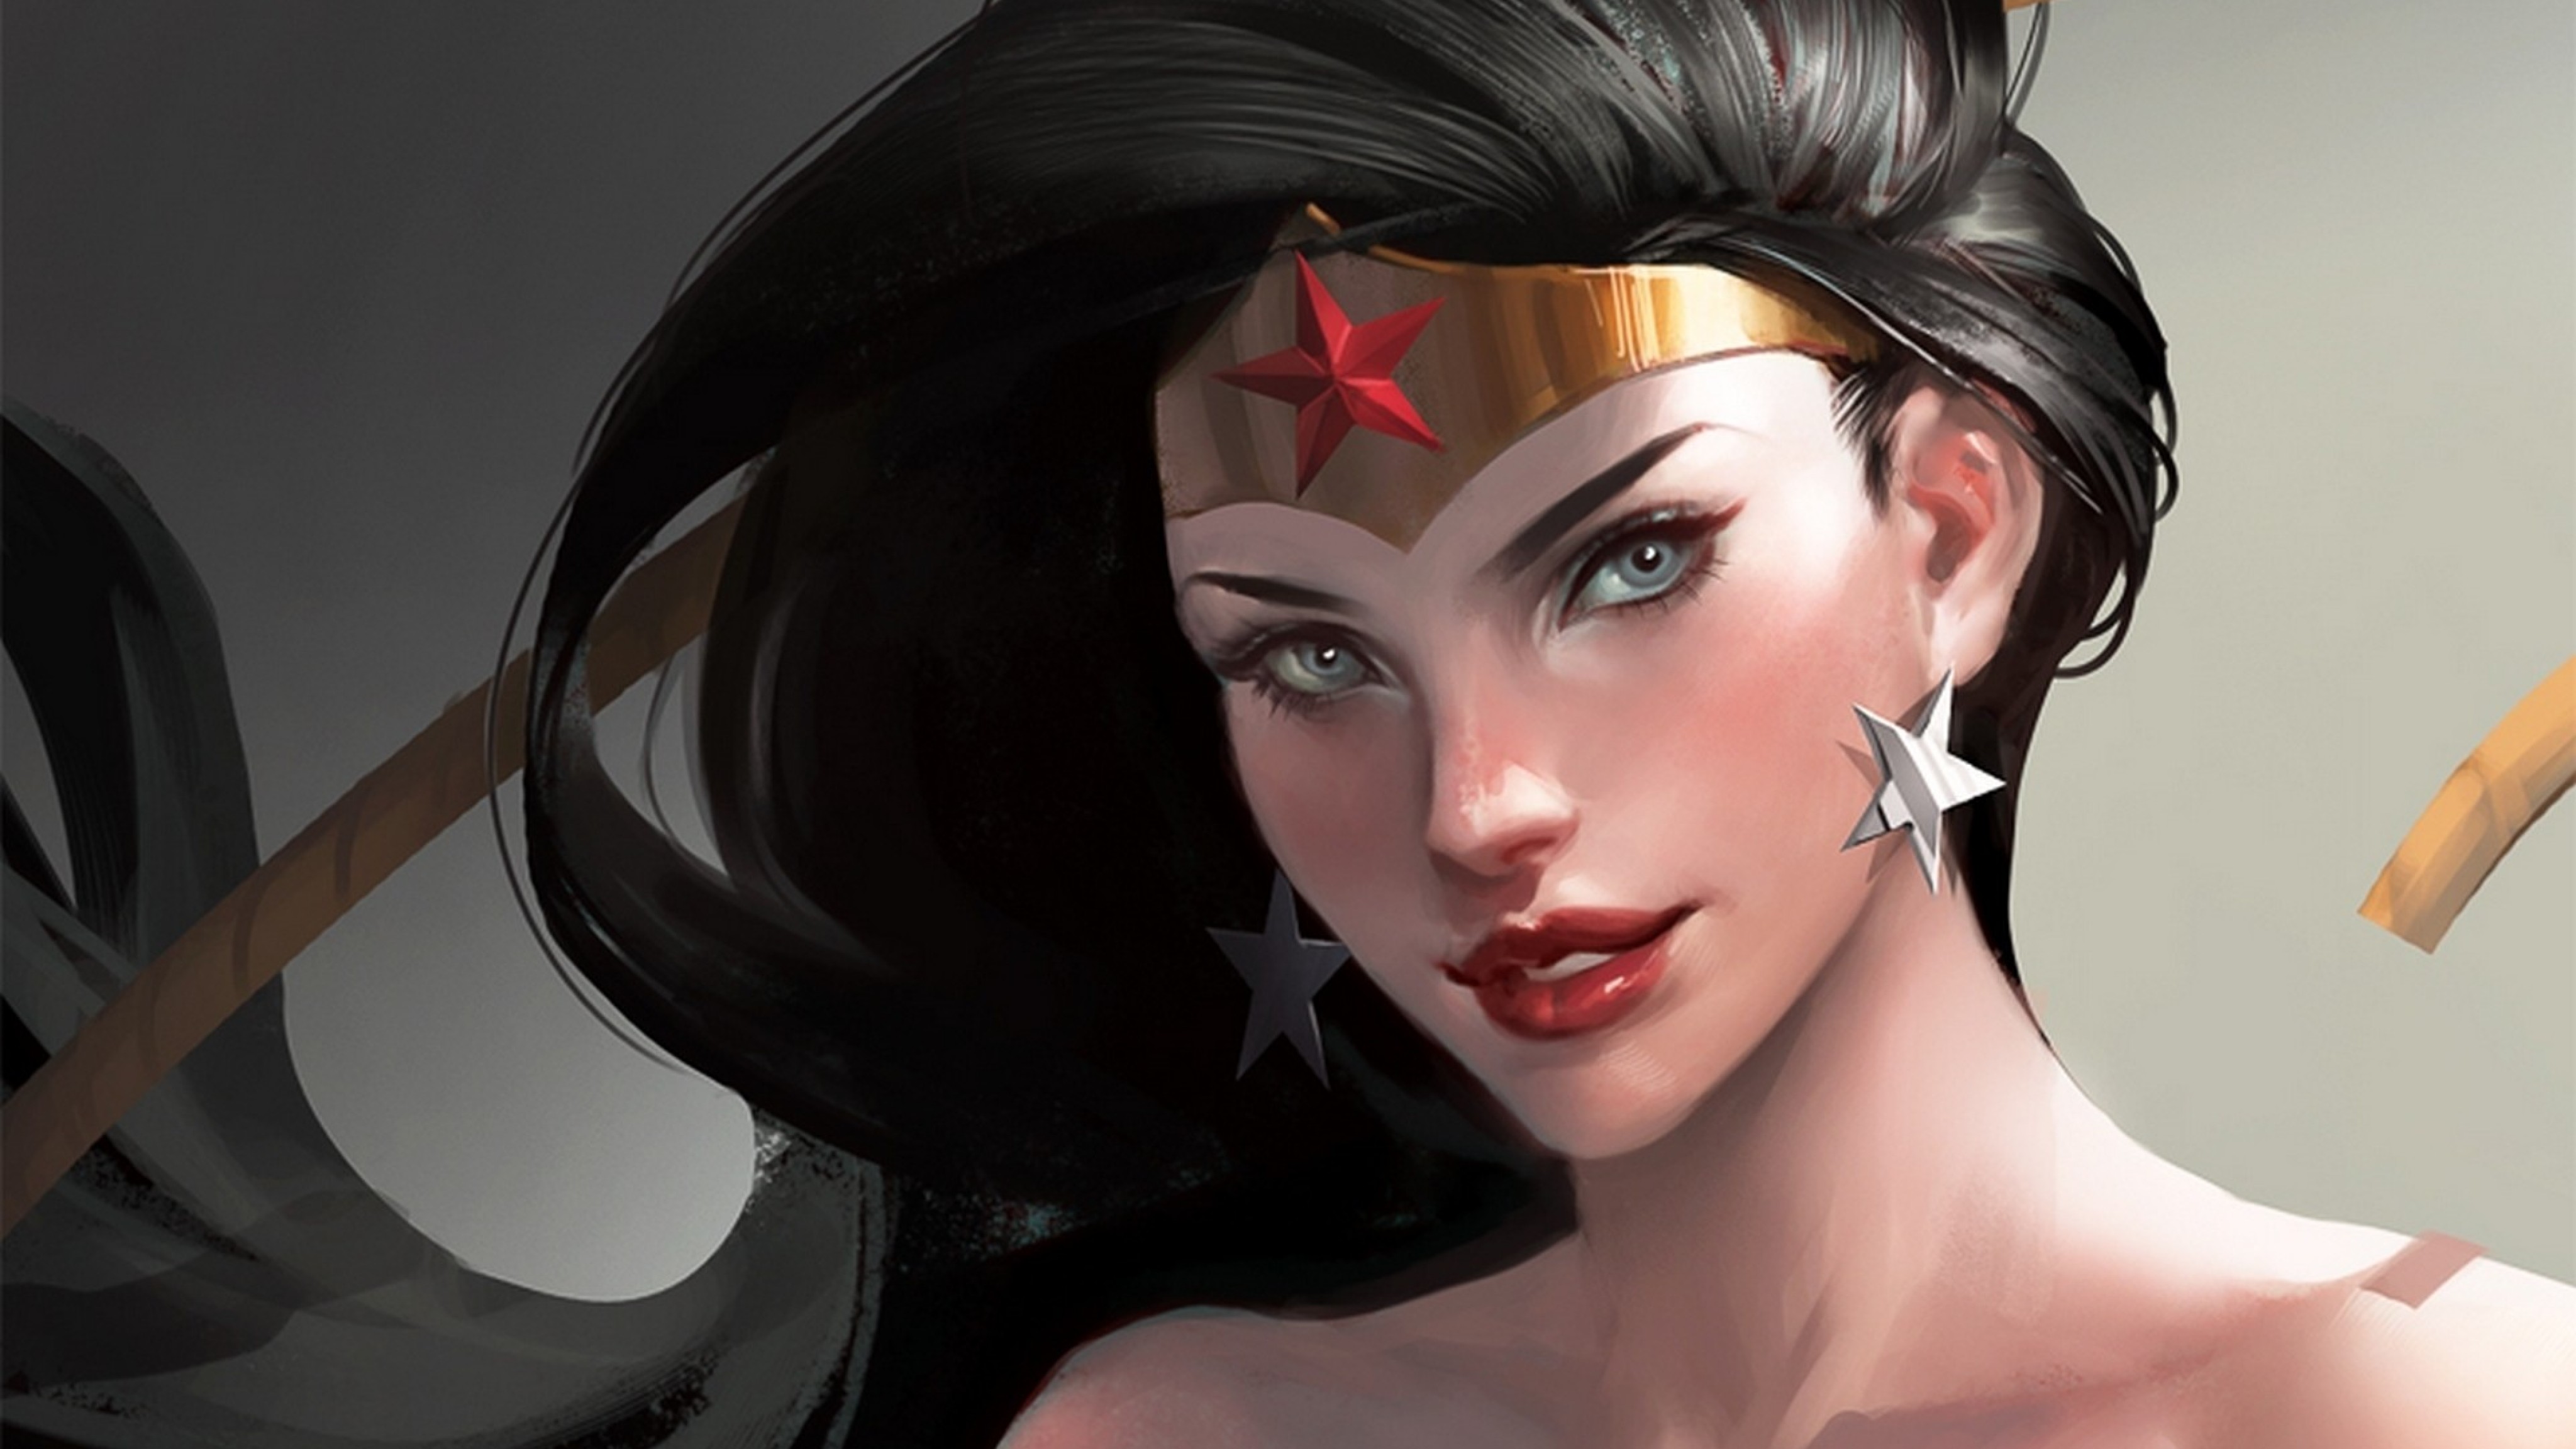 Imac 21,5 - Most Beautiful Wonder Woman - HD Wallpaper 